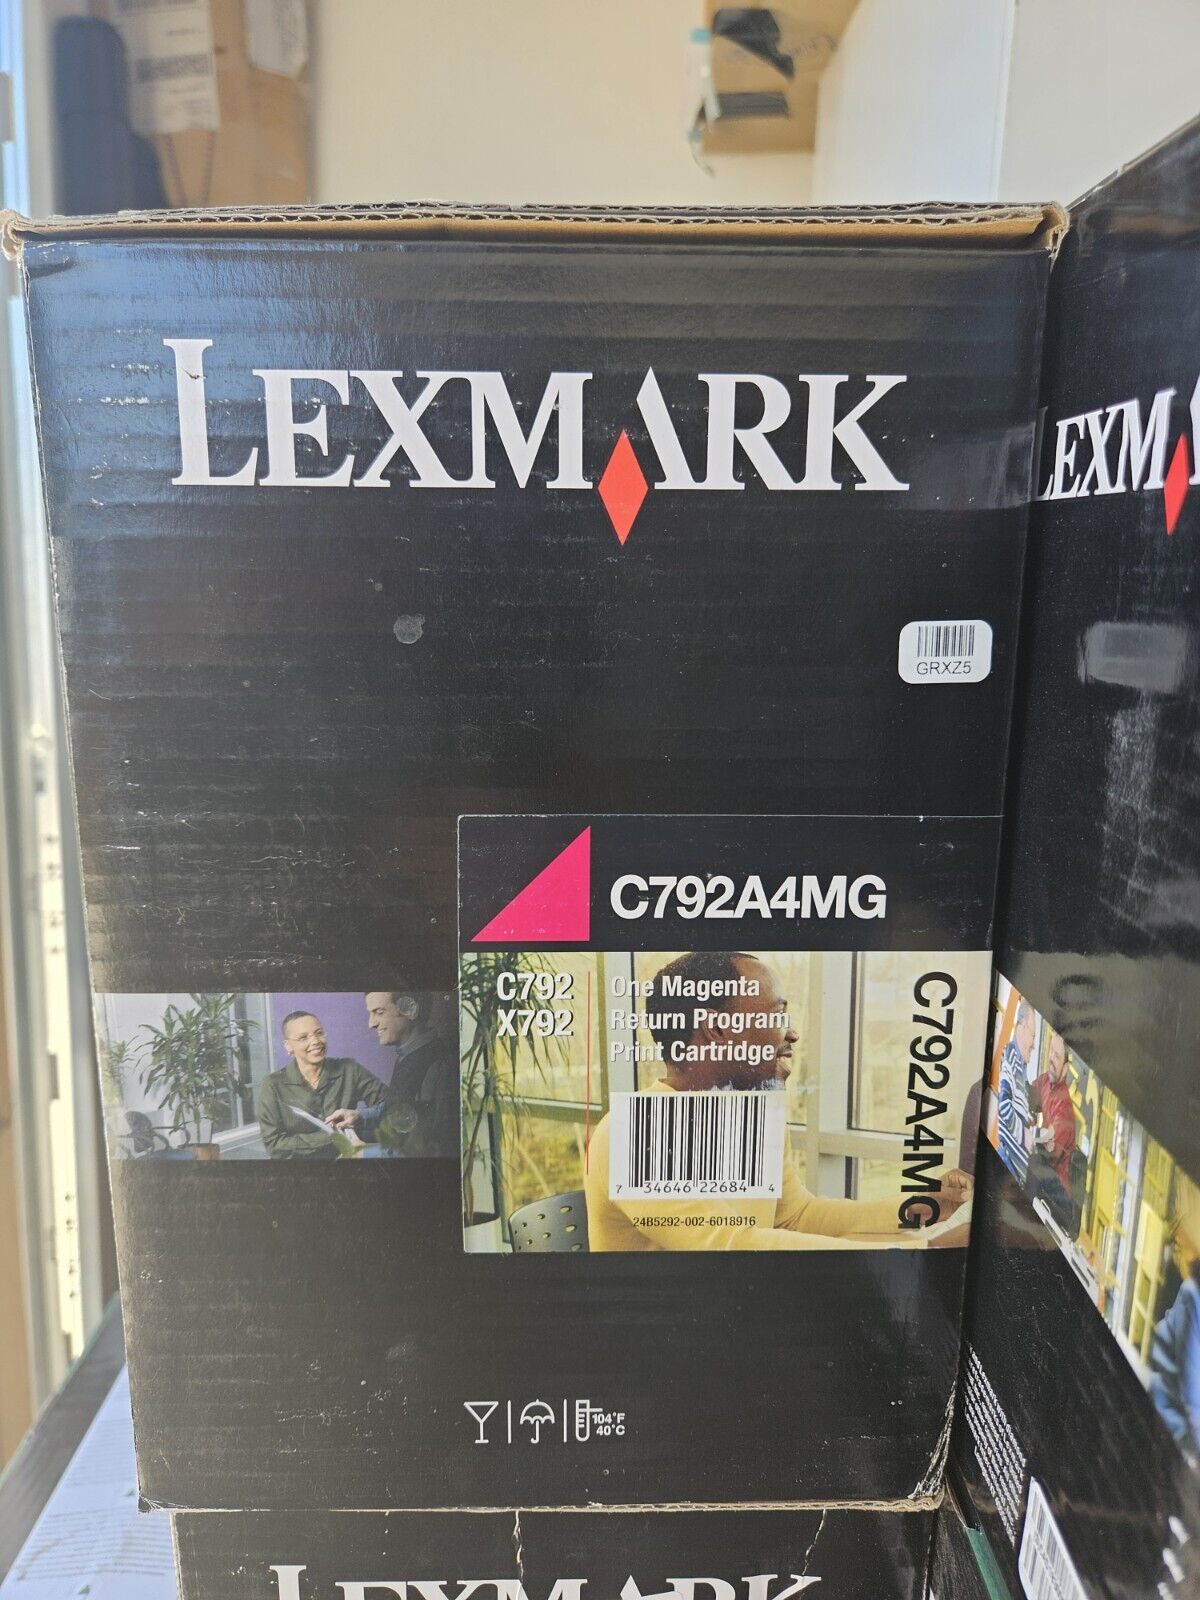 Lexmark C792A4MG Laser Printer Toner Cartridge - Magenta